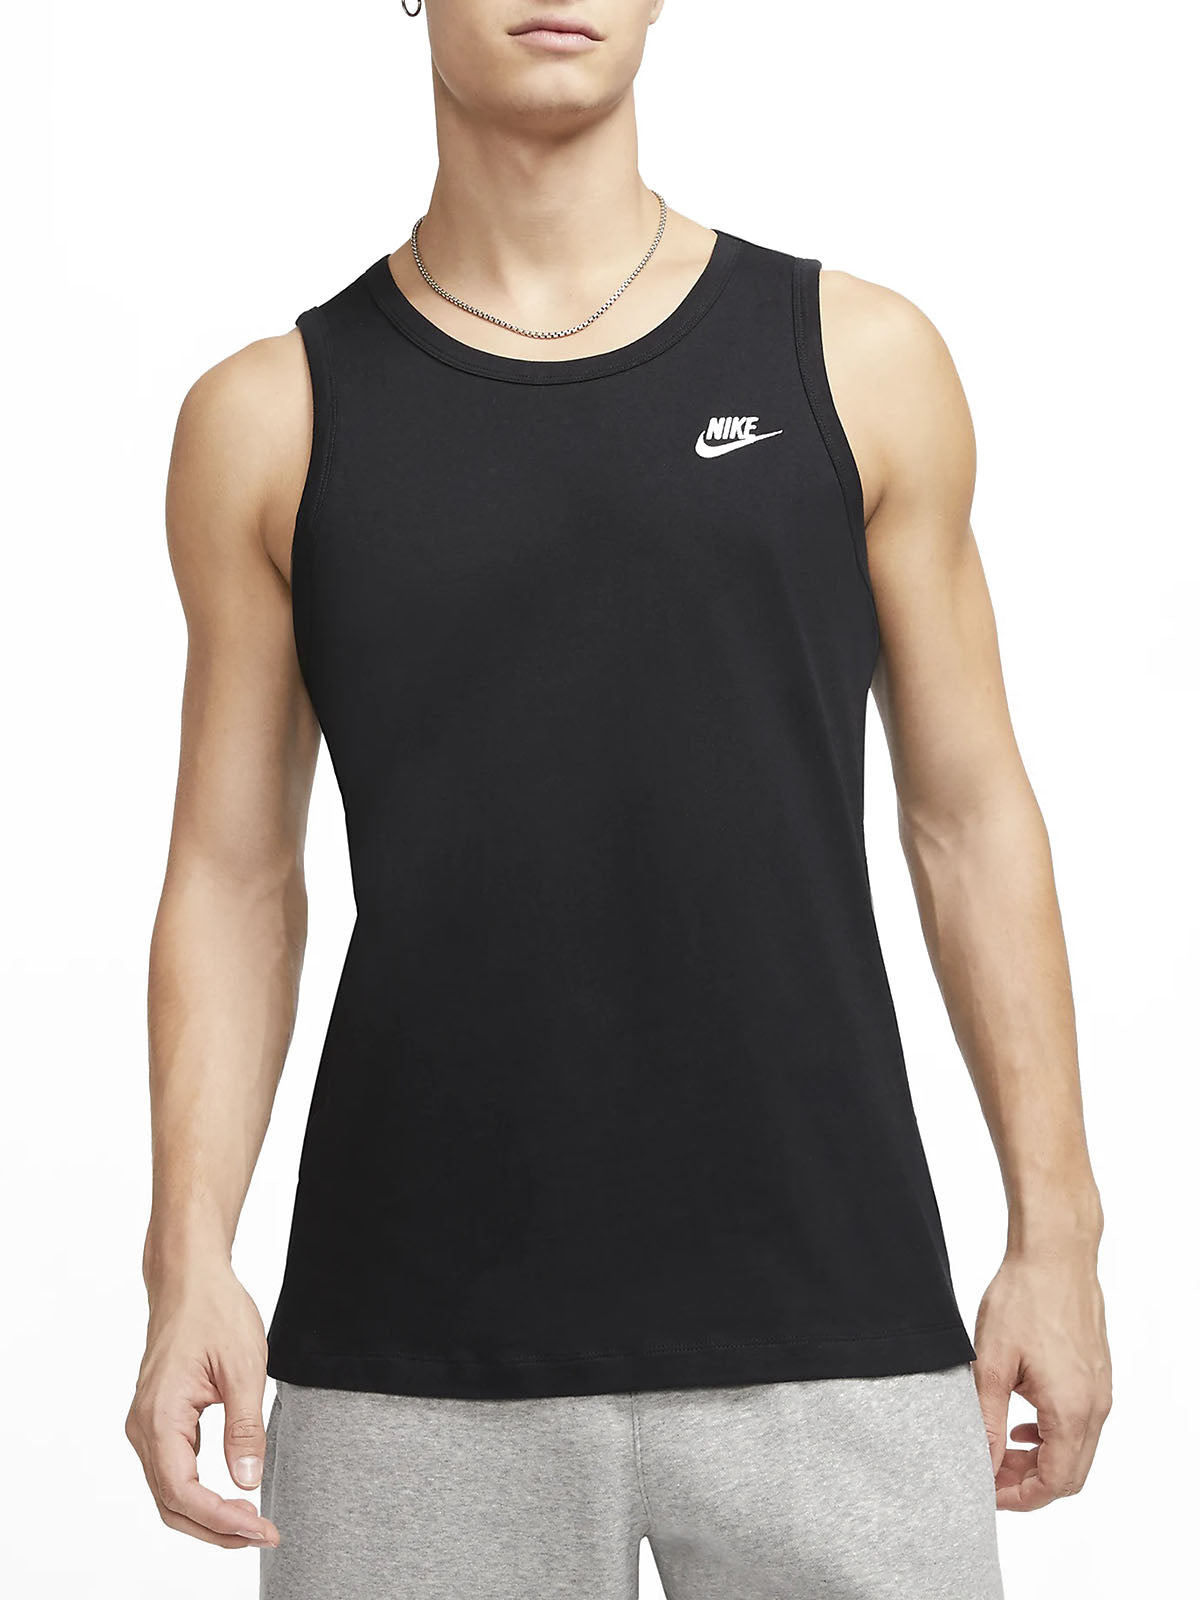 Canotte Uomo Nike - Nike Sportswear Club Tank Top - Nero